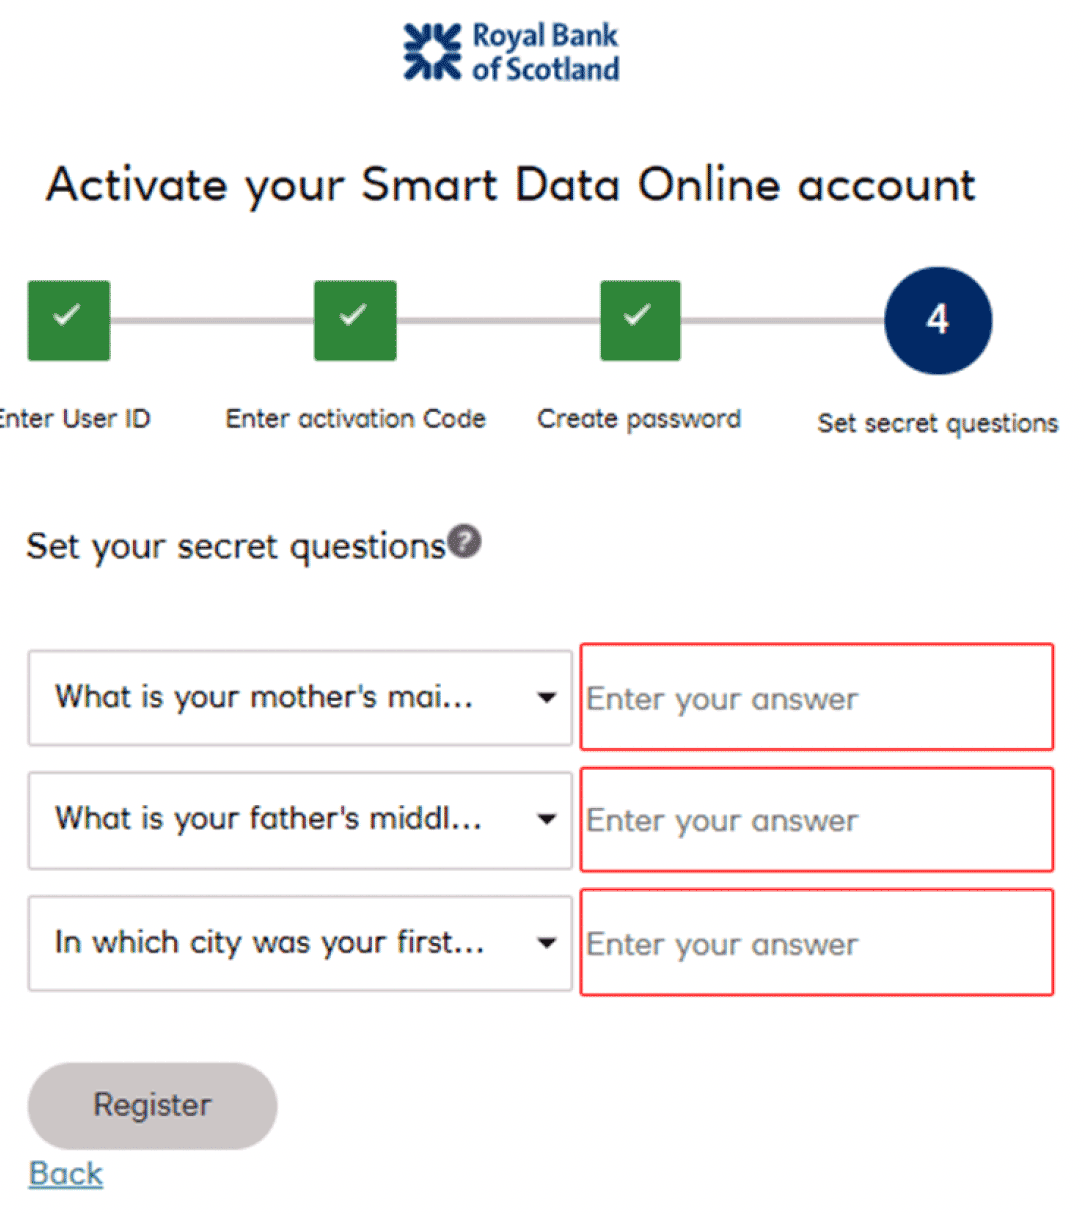 RBS Smart Data Online account set secret questions screen